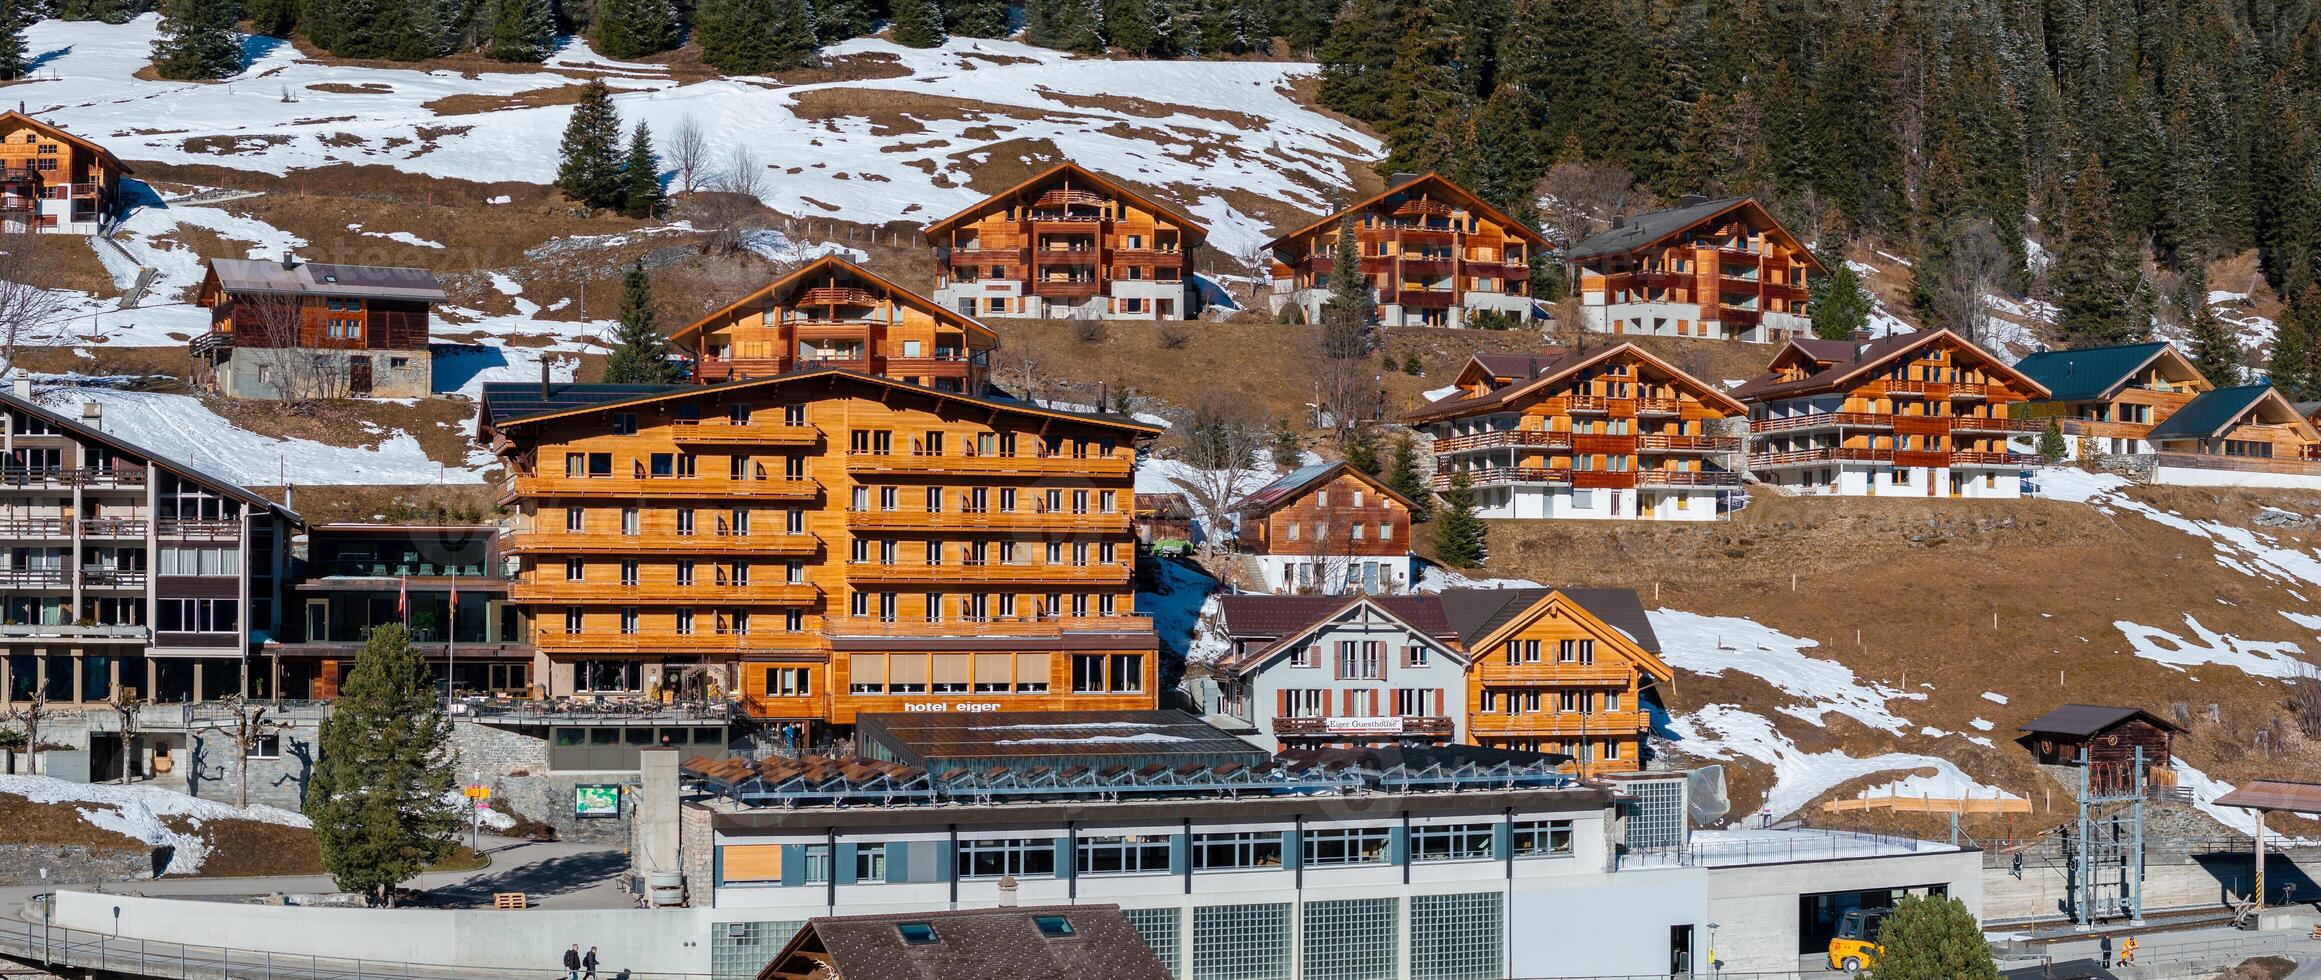 panoramisch visie van murren, Zwitserland chalet stijl gebouwen en hotel eiger foto